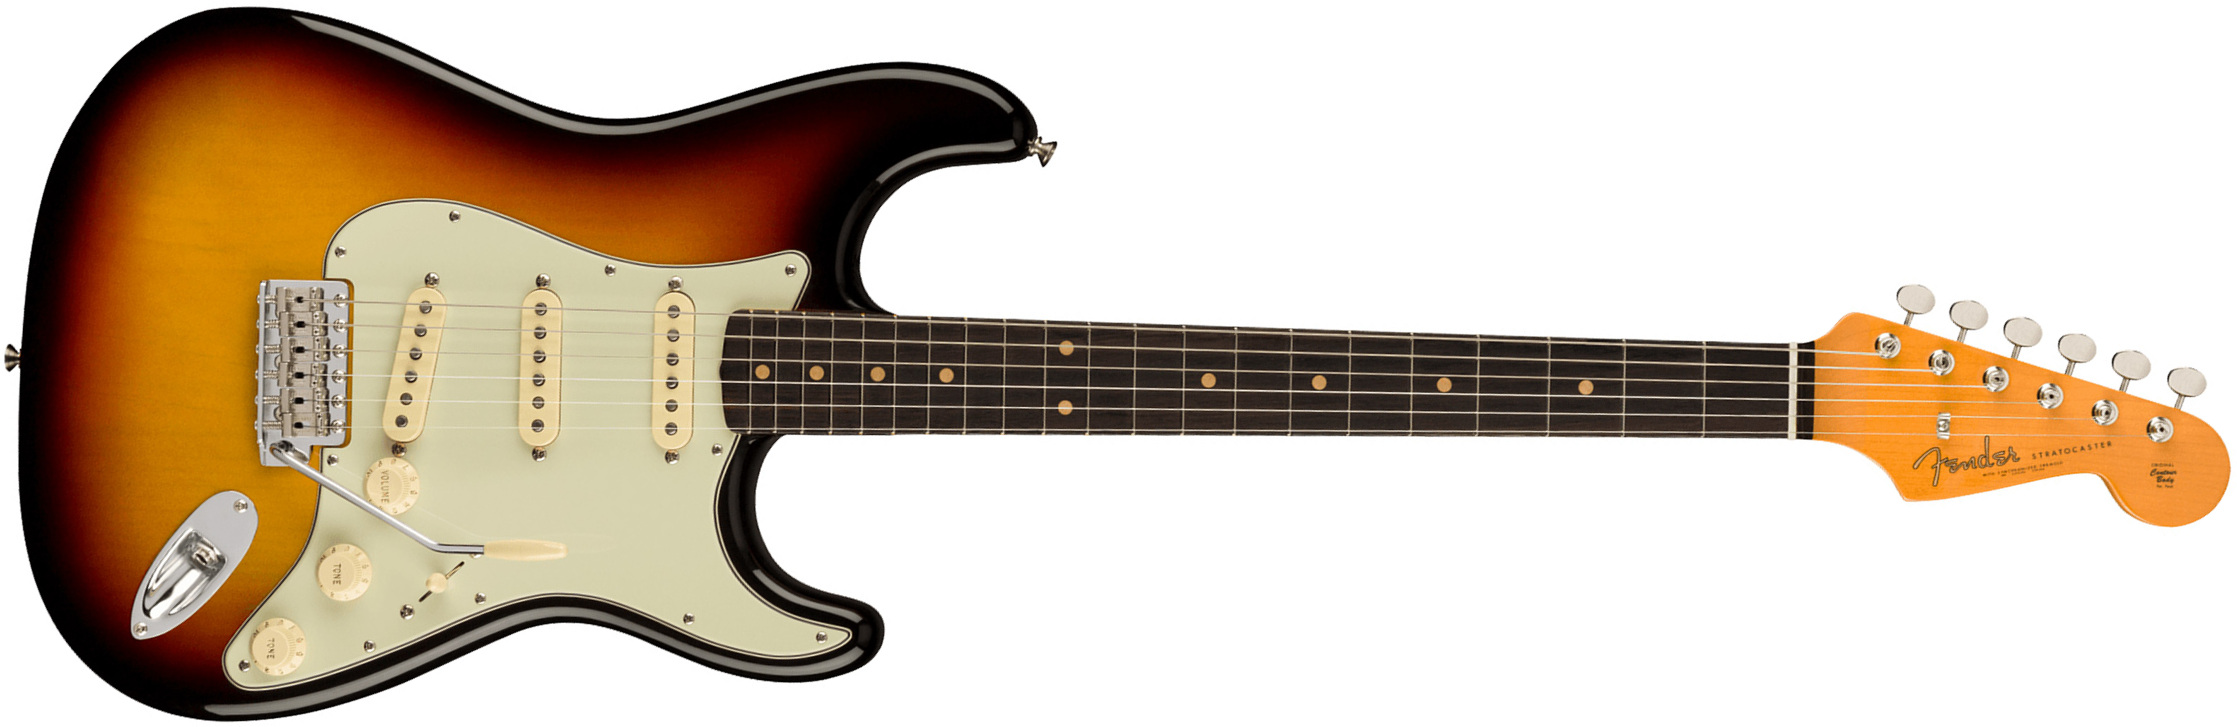 Fender Strat 1961 American Vintage Ii Usa 3s Trem Rw - 3-color Sunburst - Guitarra eléctrica con forma de str. - Main picture